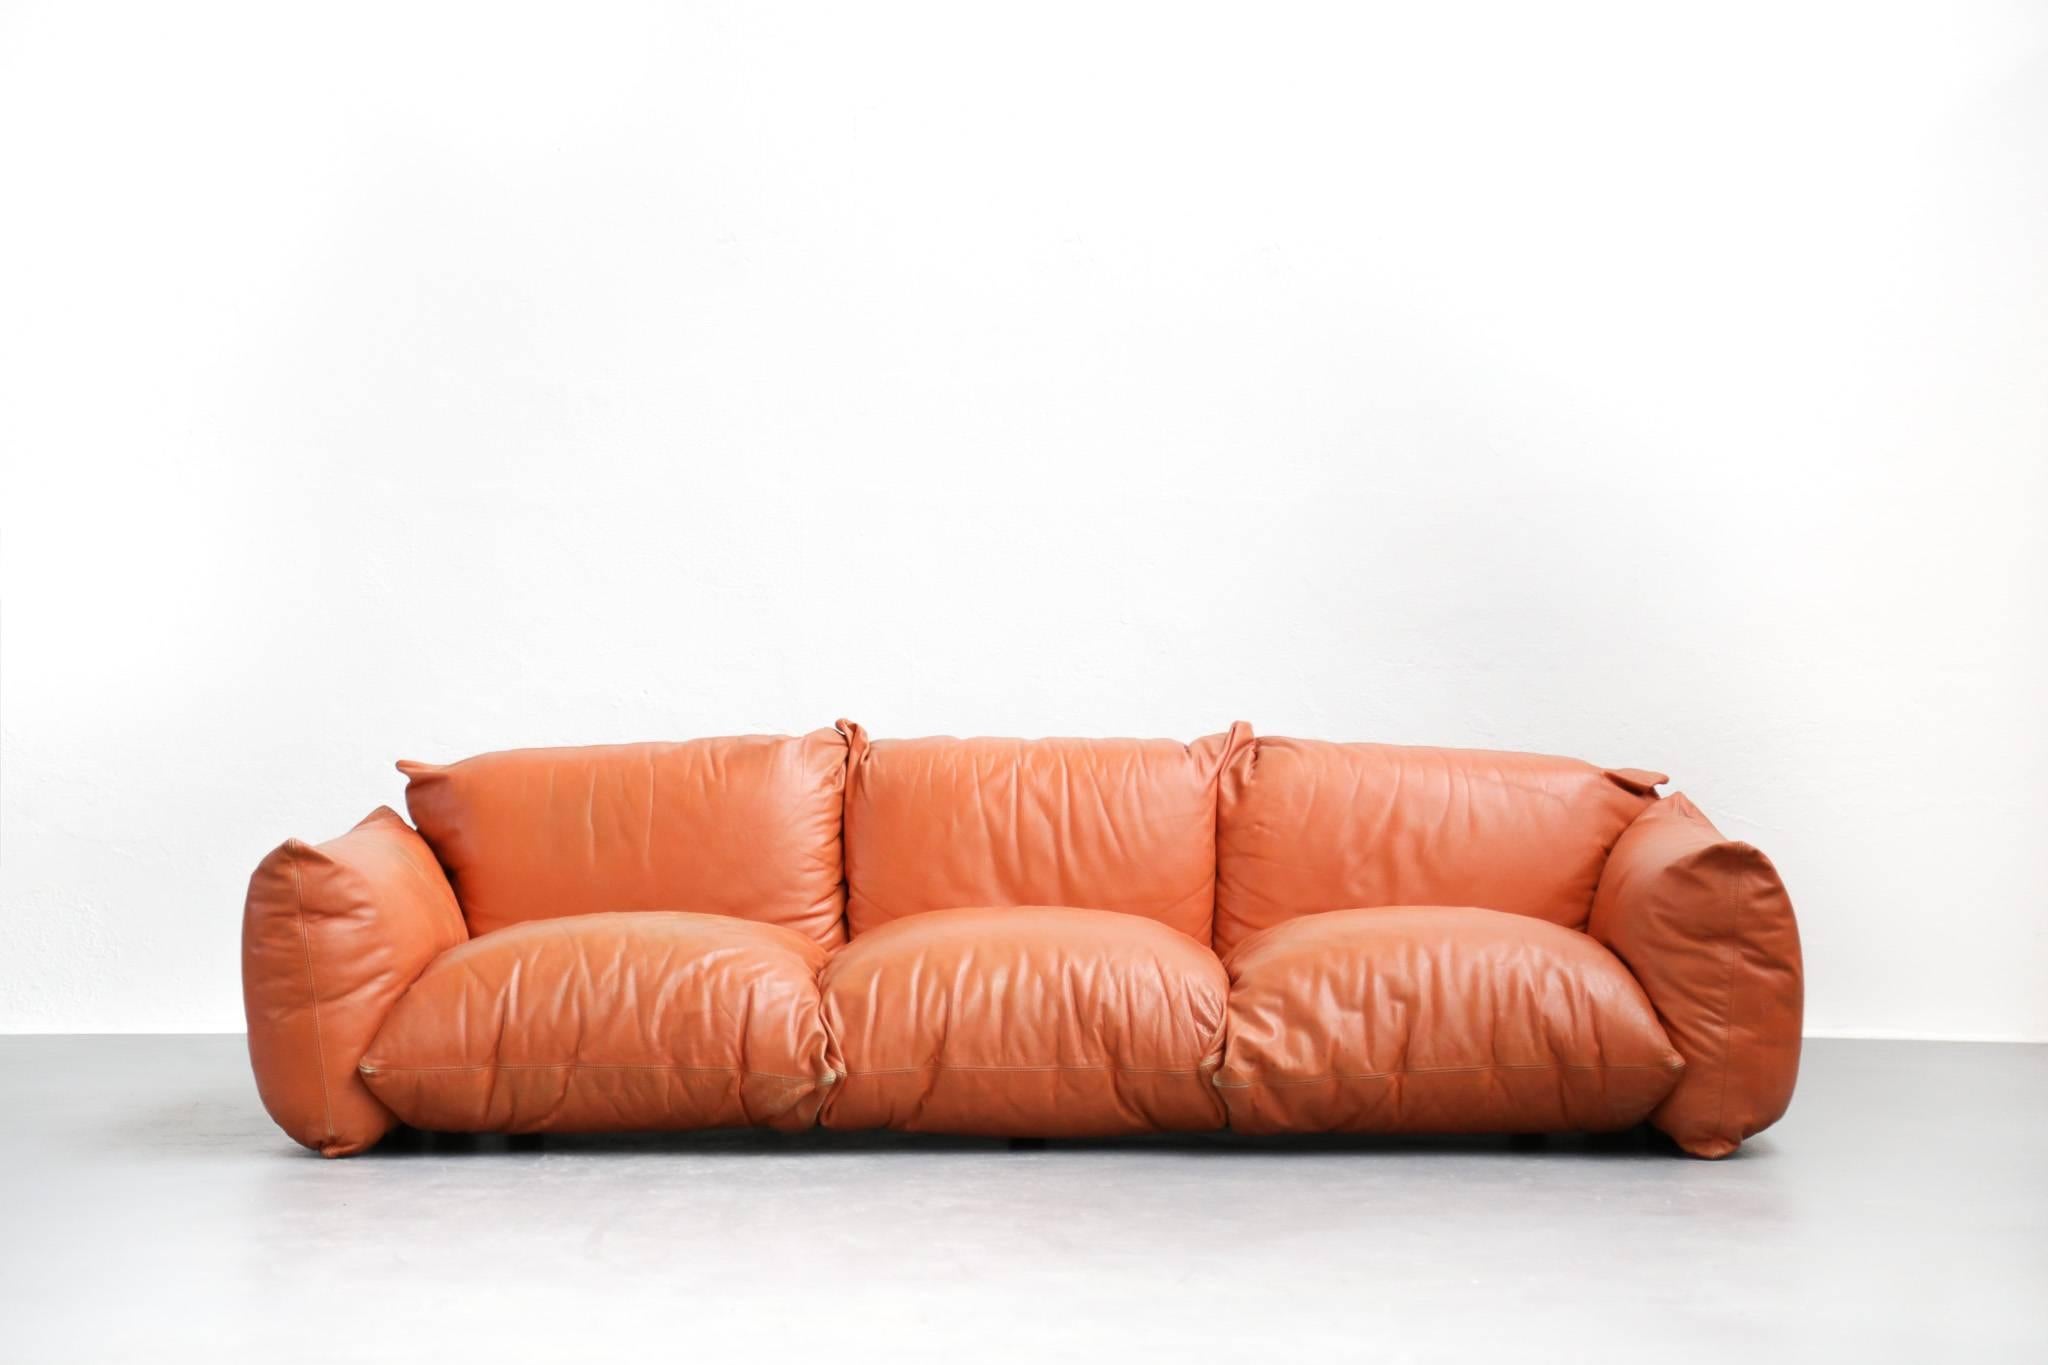 Graphic orange sofa designed by Mario Marenco for Arflex in 1970s.
Three-seat sofa made of leather.